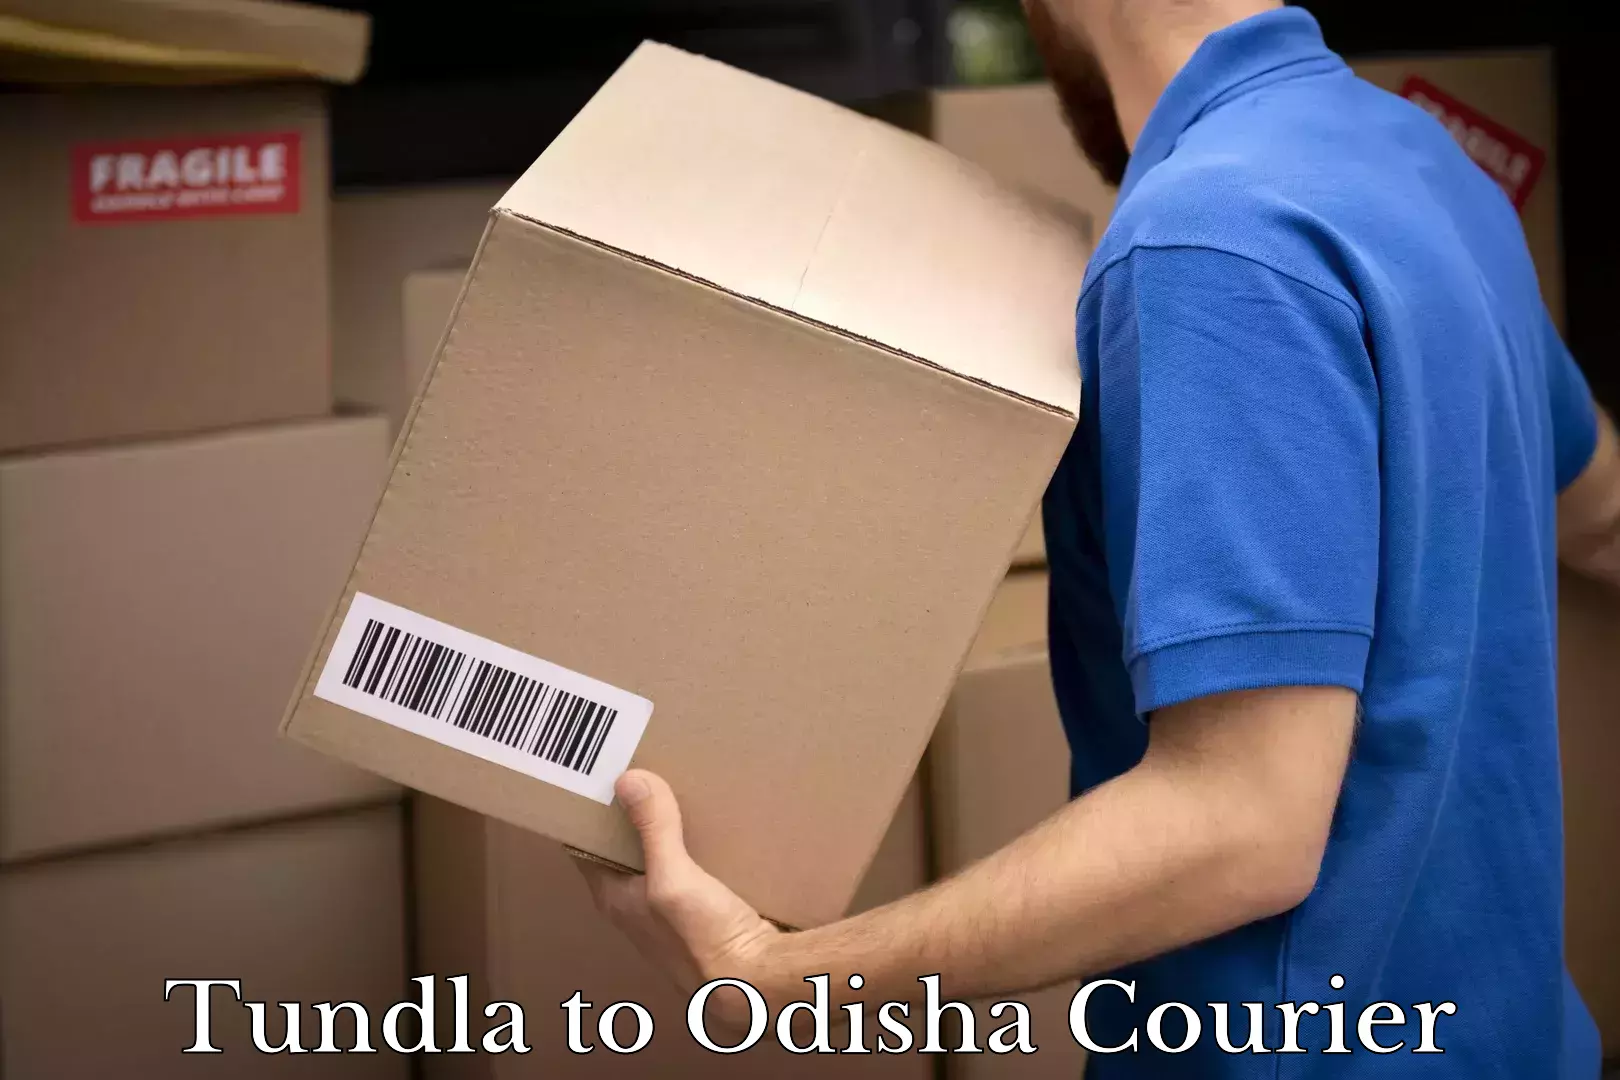 Express delivery network Tundla to Odisha